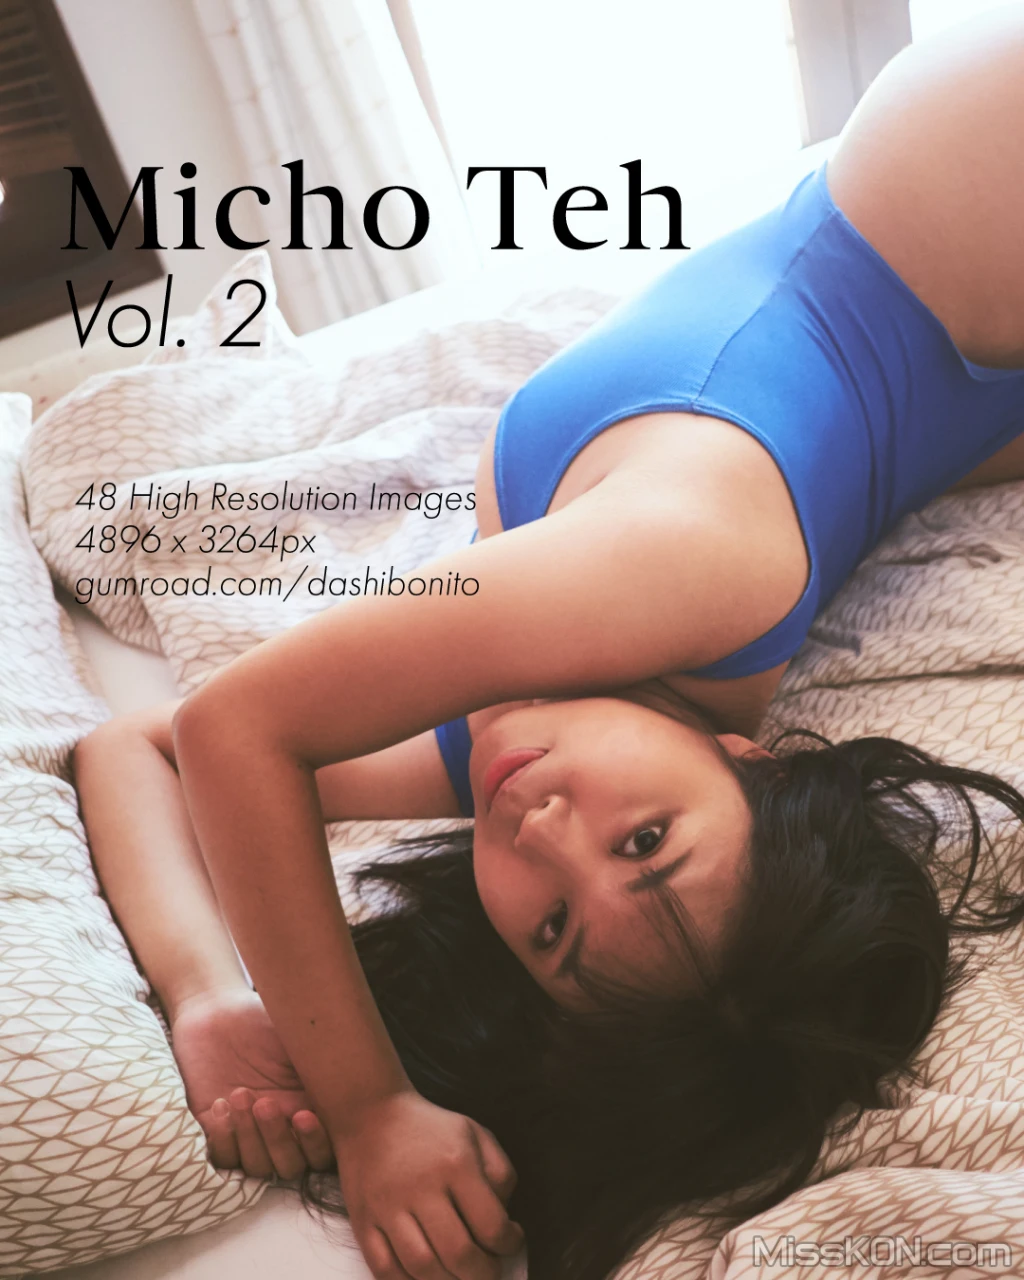 Micho Teh Vol.2: Holiday House Blue Leotard (51 photos)